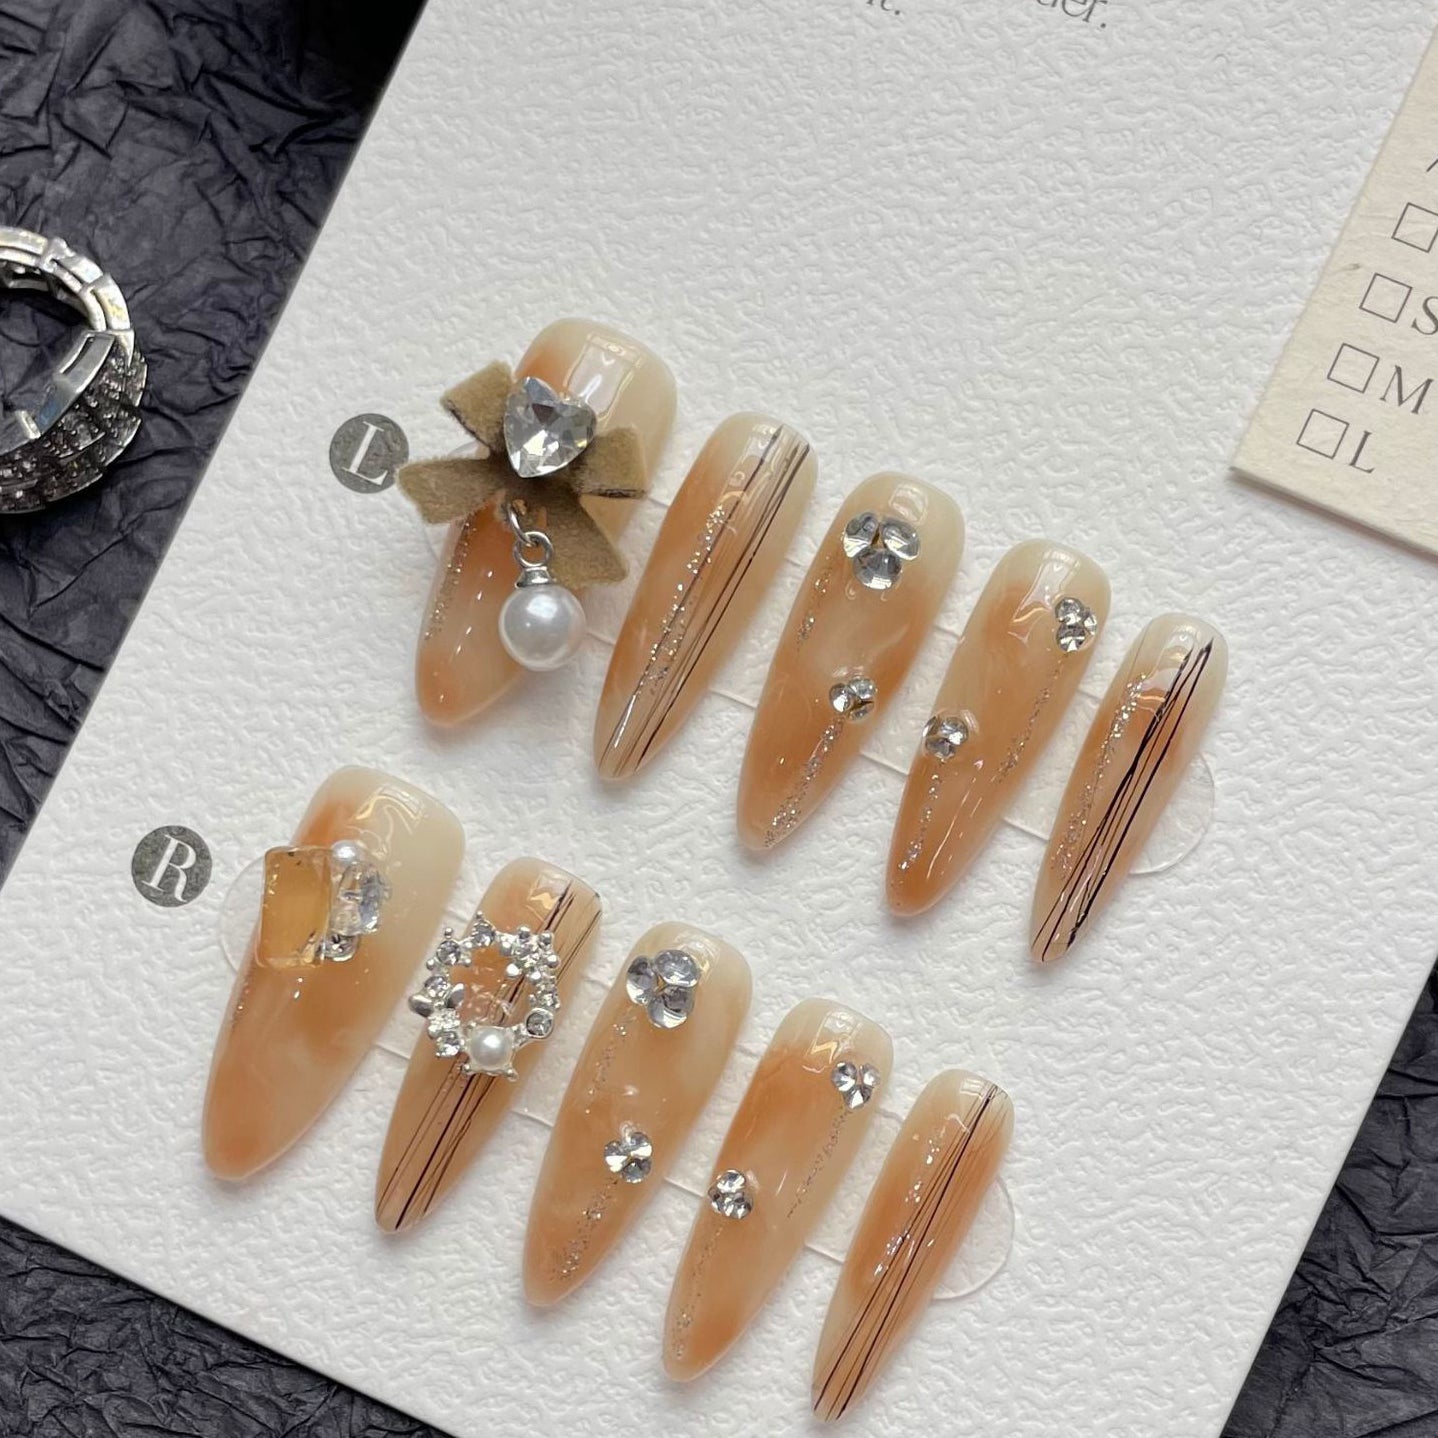 1269 bow style press on nails 100% handmade false nails nude color